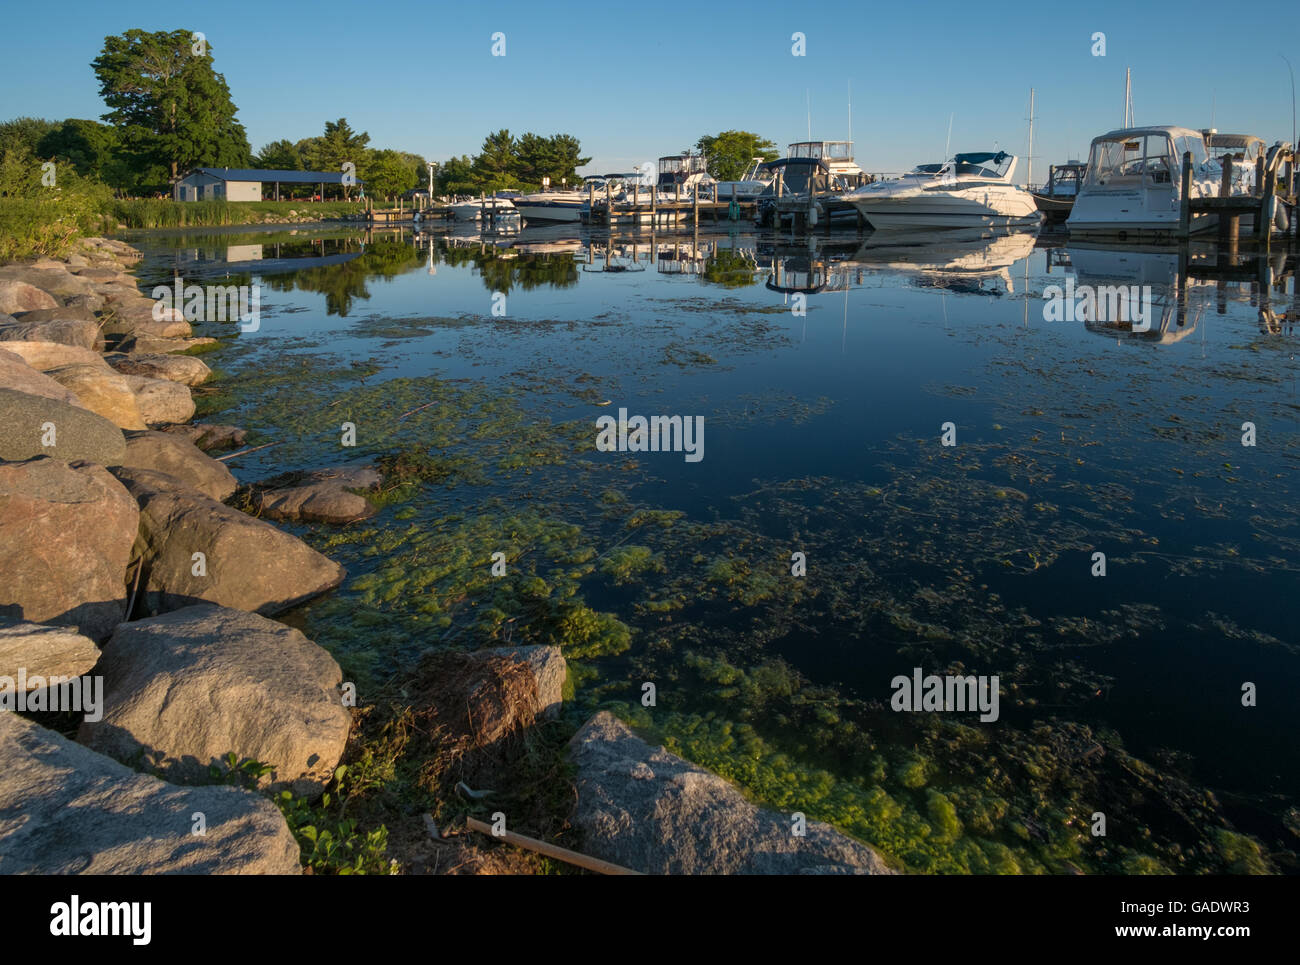 Boats moored in the White Lake public marina, Whitehall, Michigan, USA Stock Photo